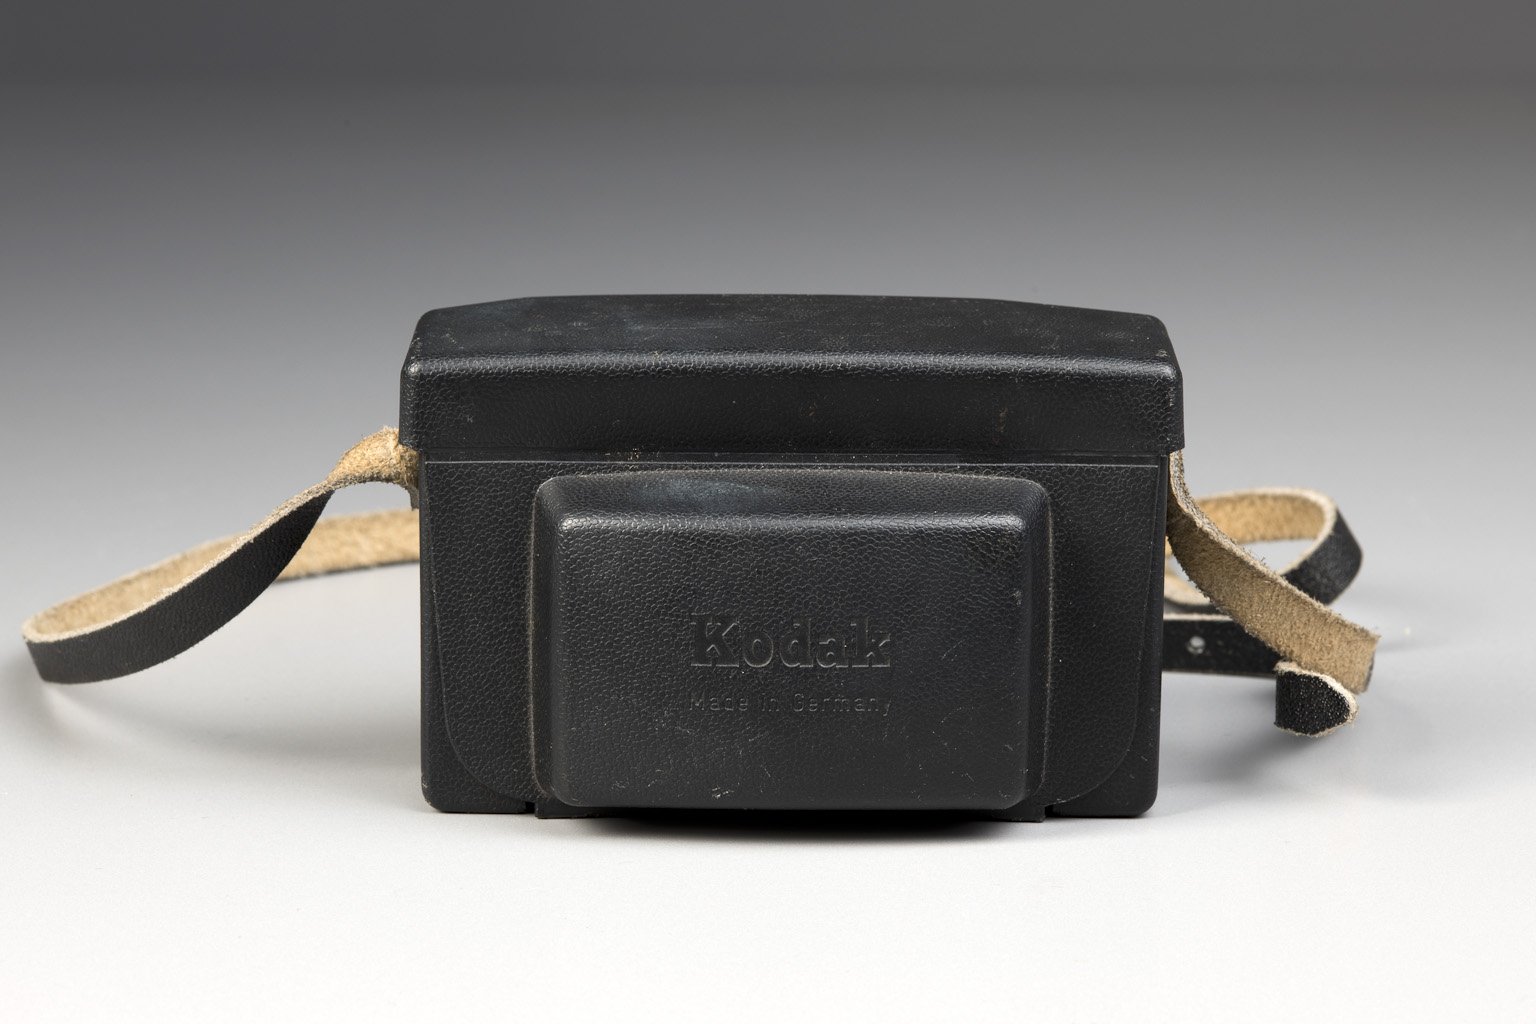 Sucherkamera Kodk Instamatic camera 155 X (Freilichtmuseum Roscheider Hof CC0)